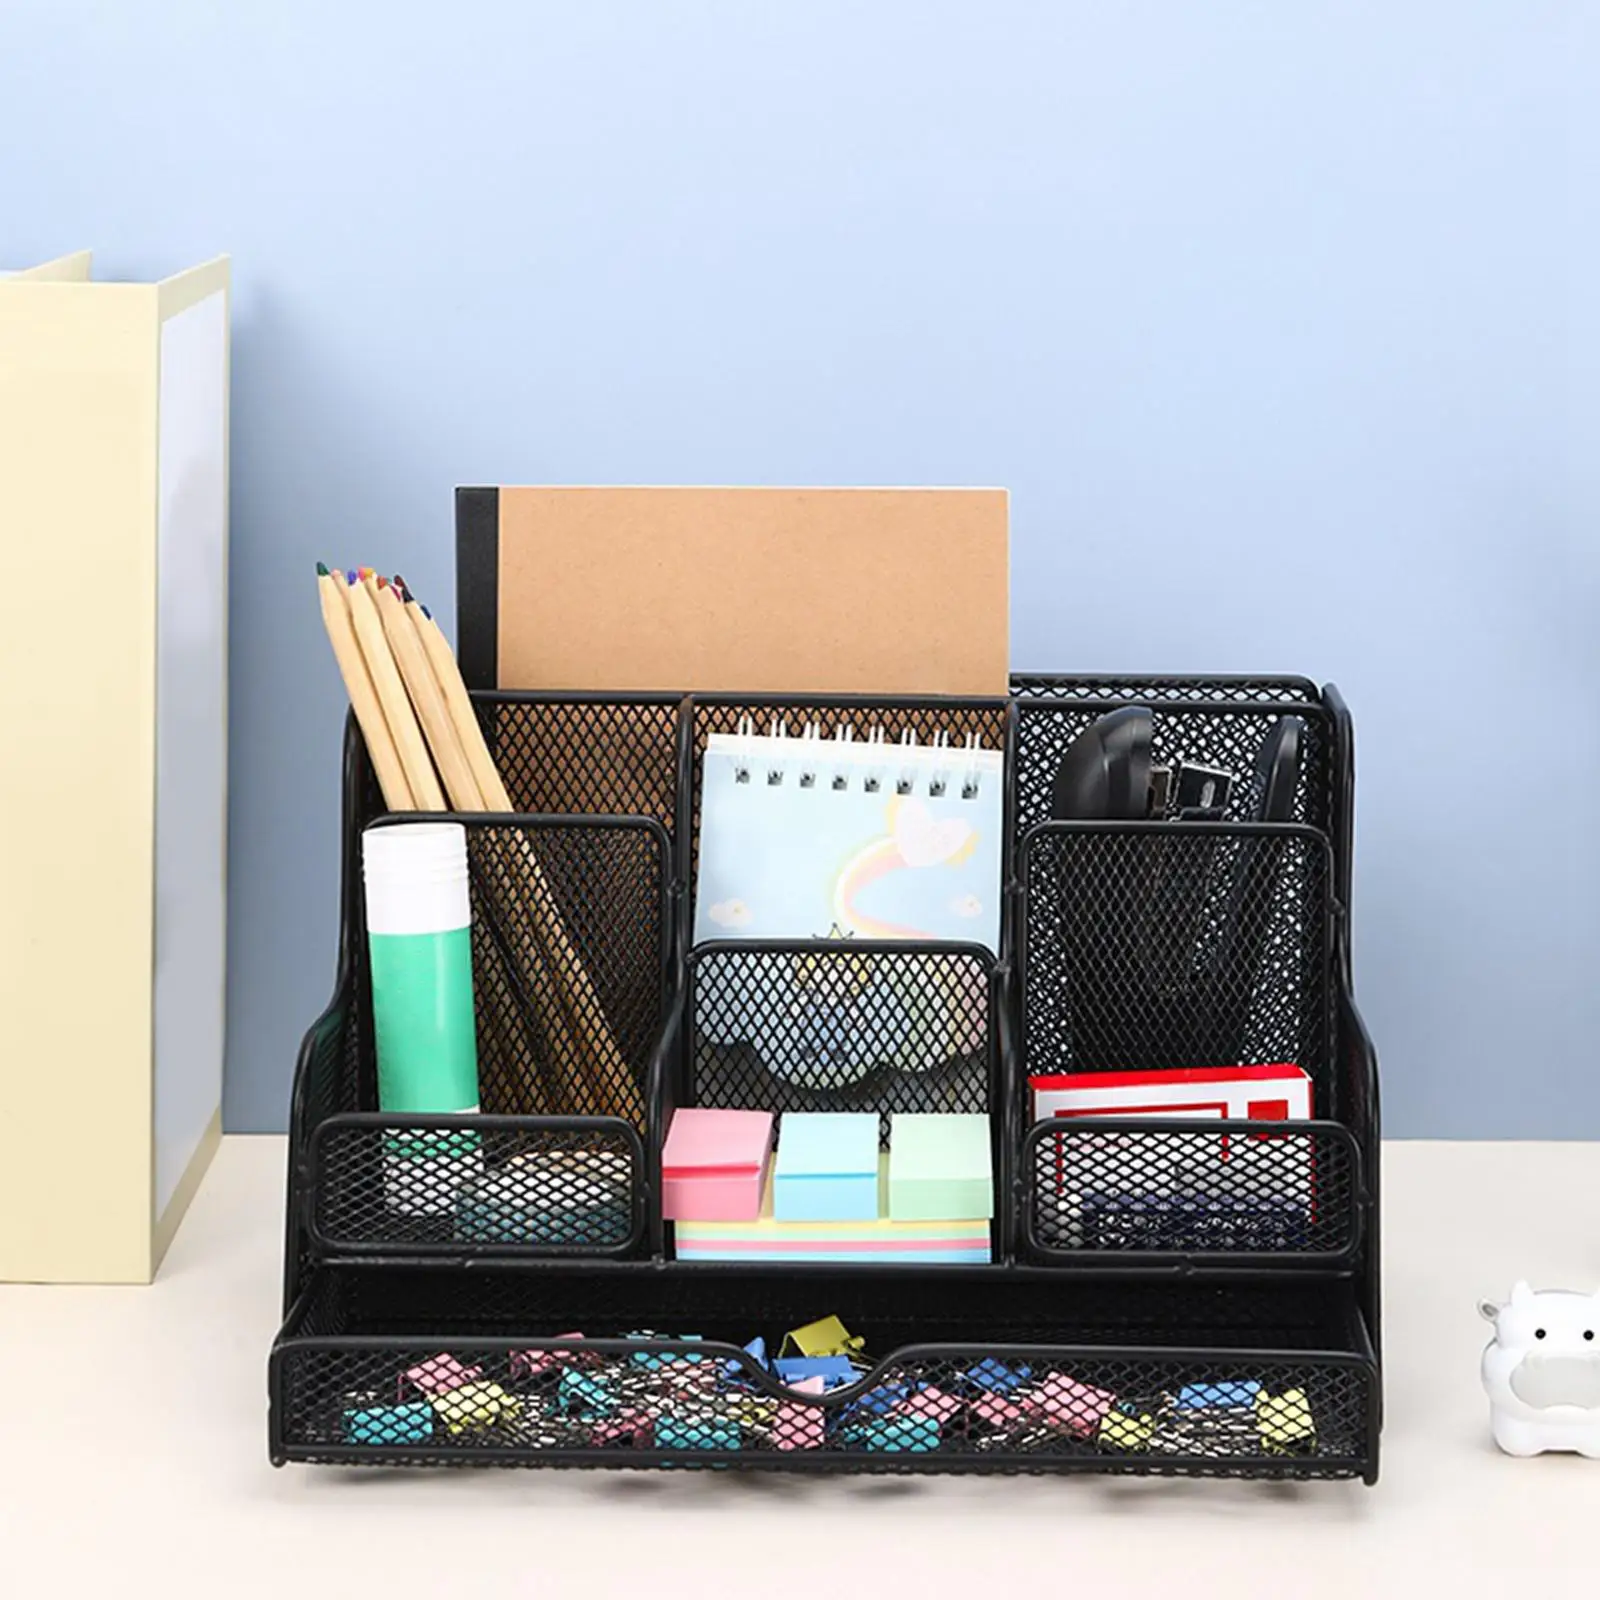 Mesh Desk Organizer, Pencil Holder Sticky Notes Desk Accessories Organizers Storage Caddy for Home